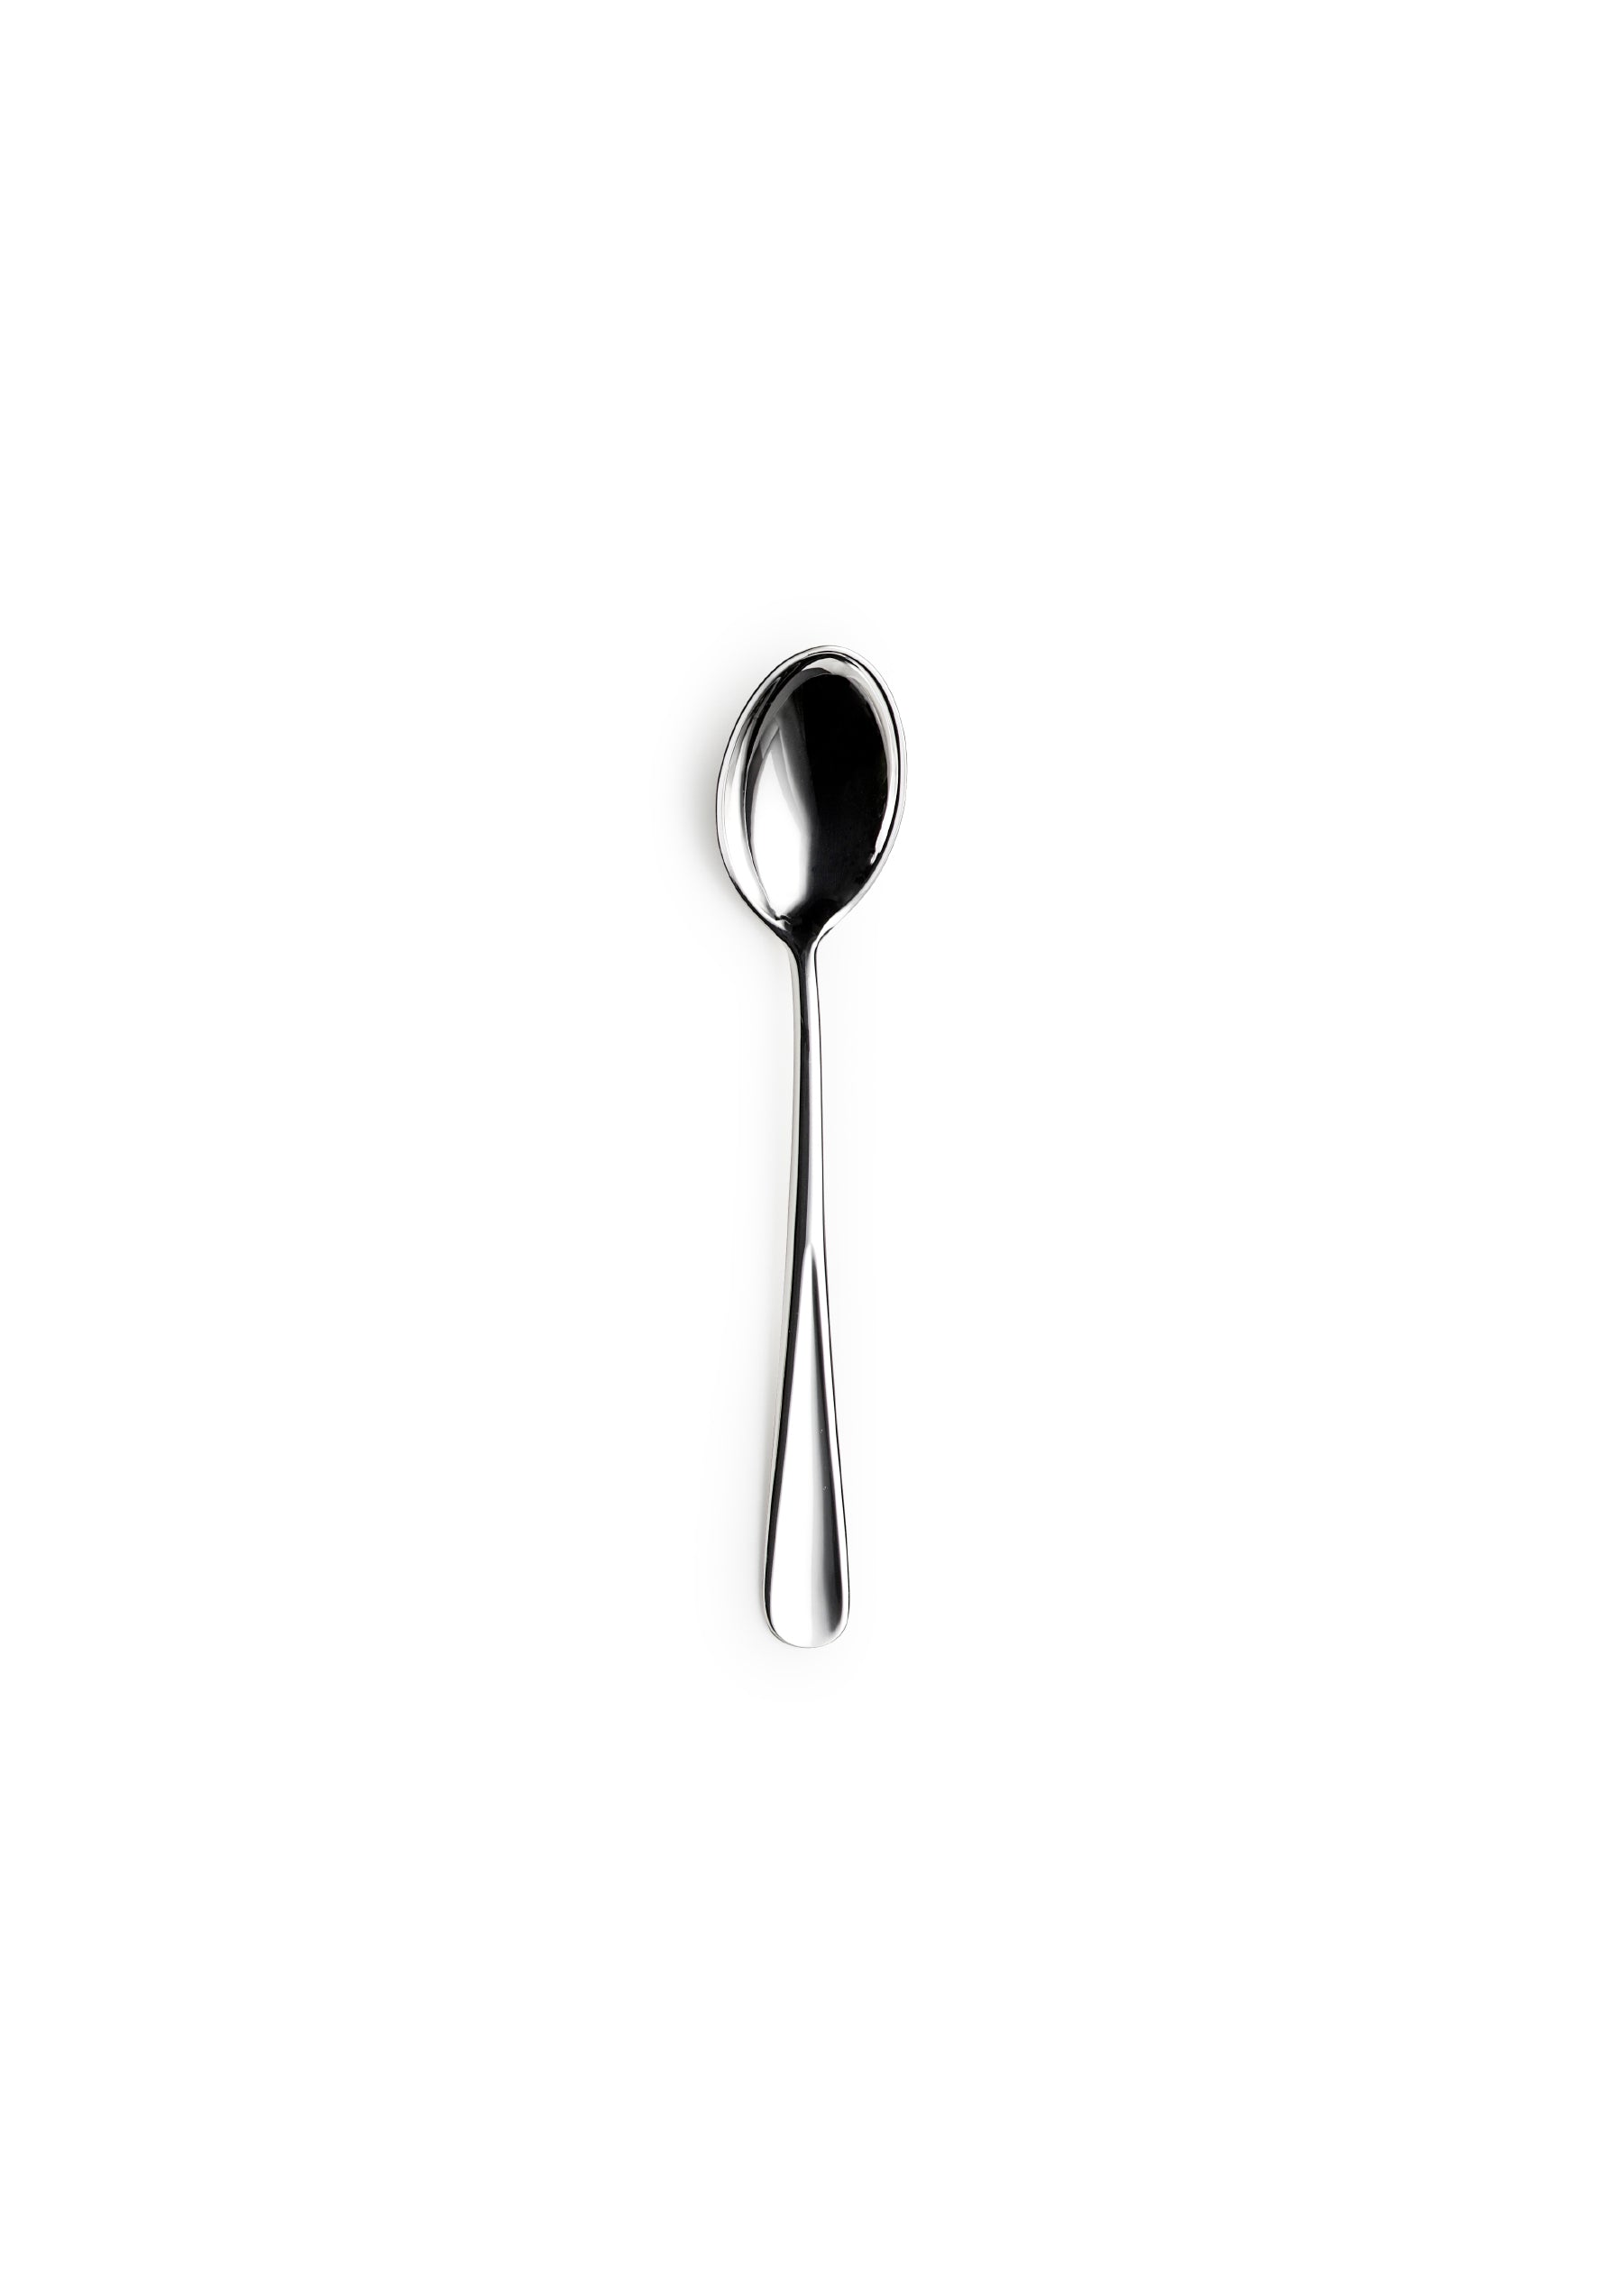 Moon teaspoon